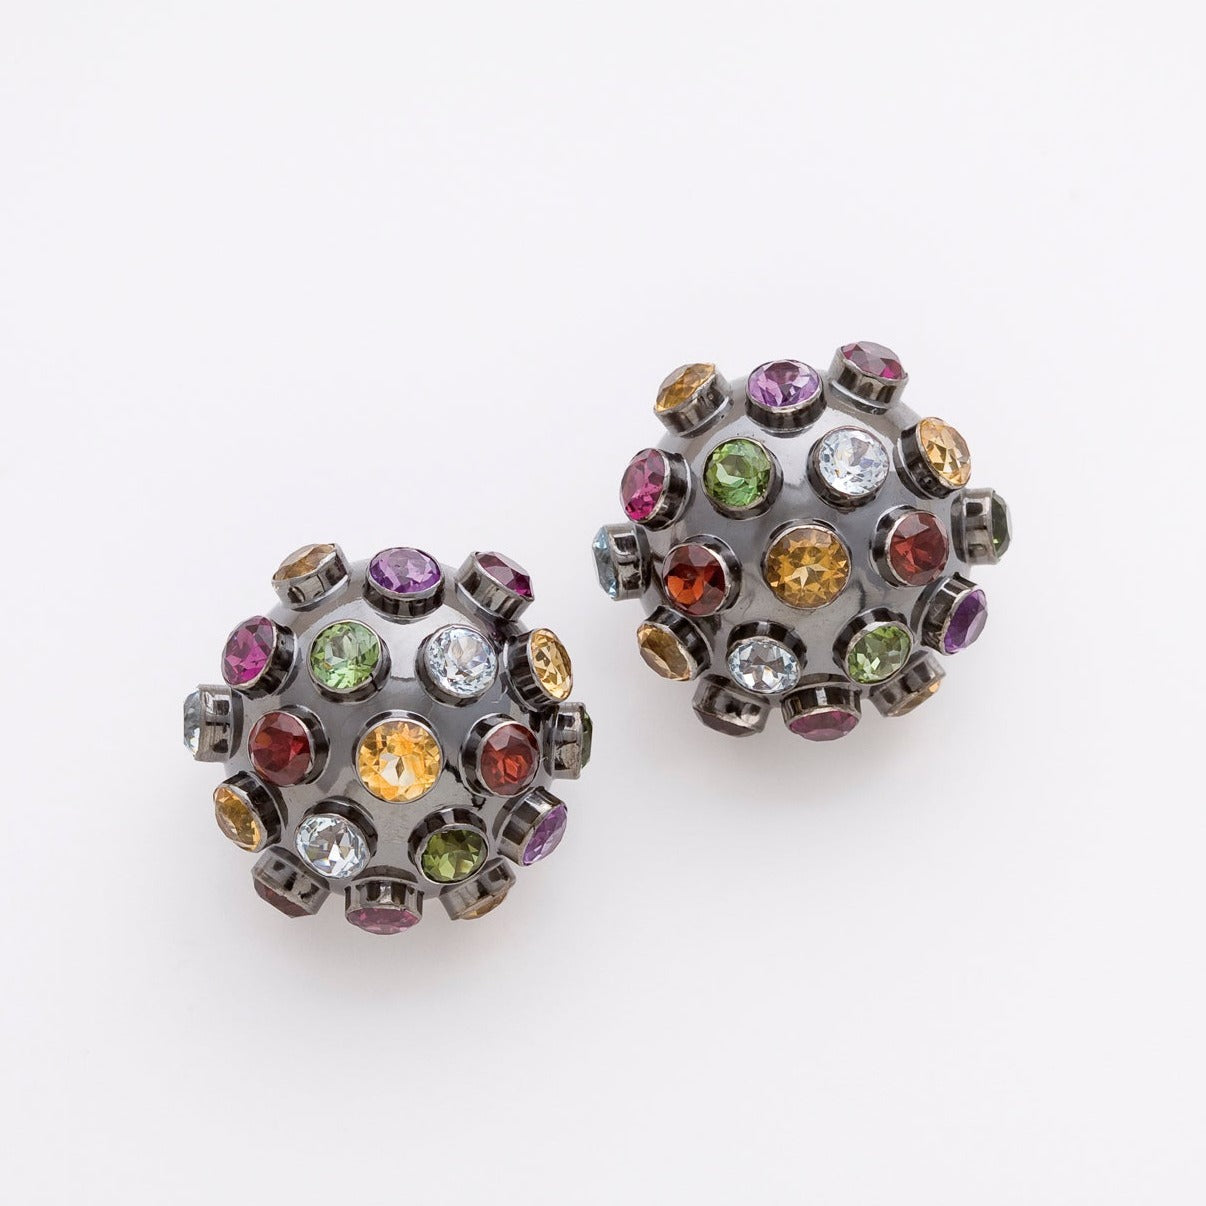 Blackened Gold  Earrings with Colored Stones Stud Earrings Carolyn Rodney   